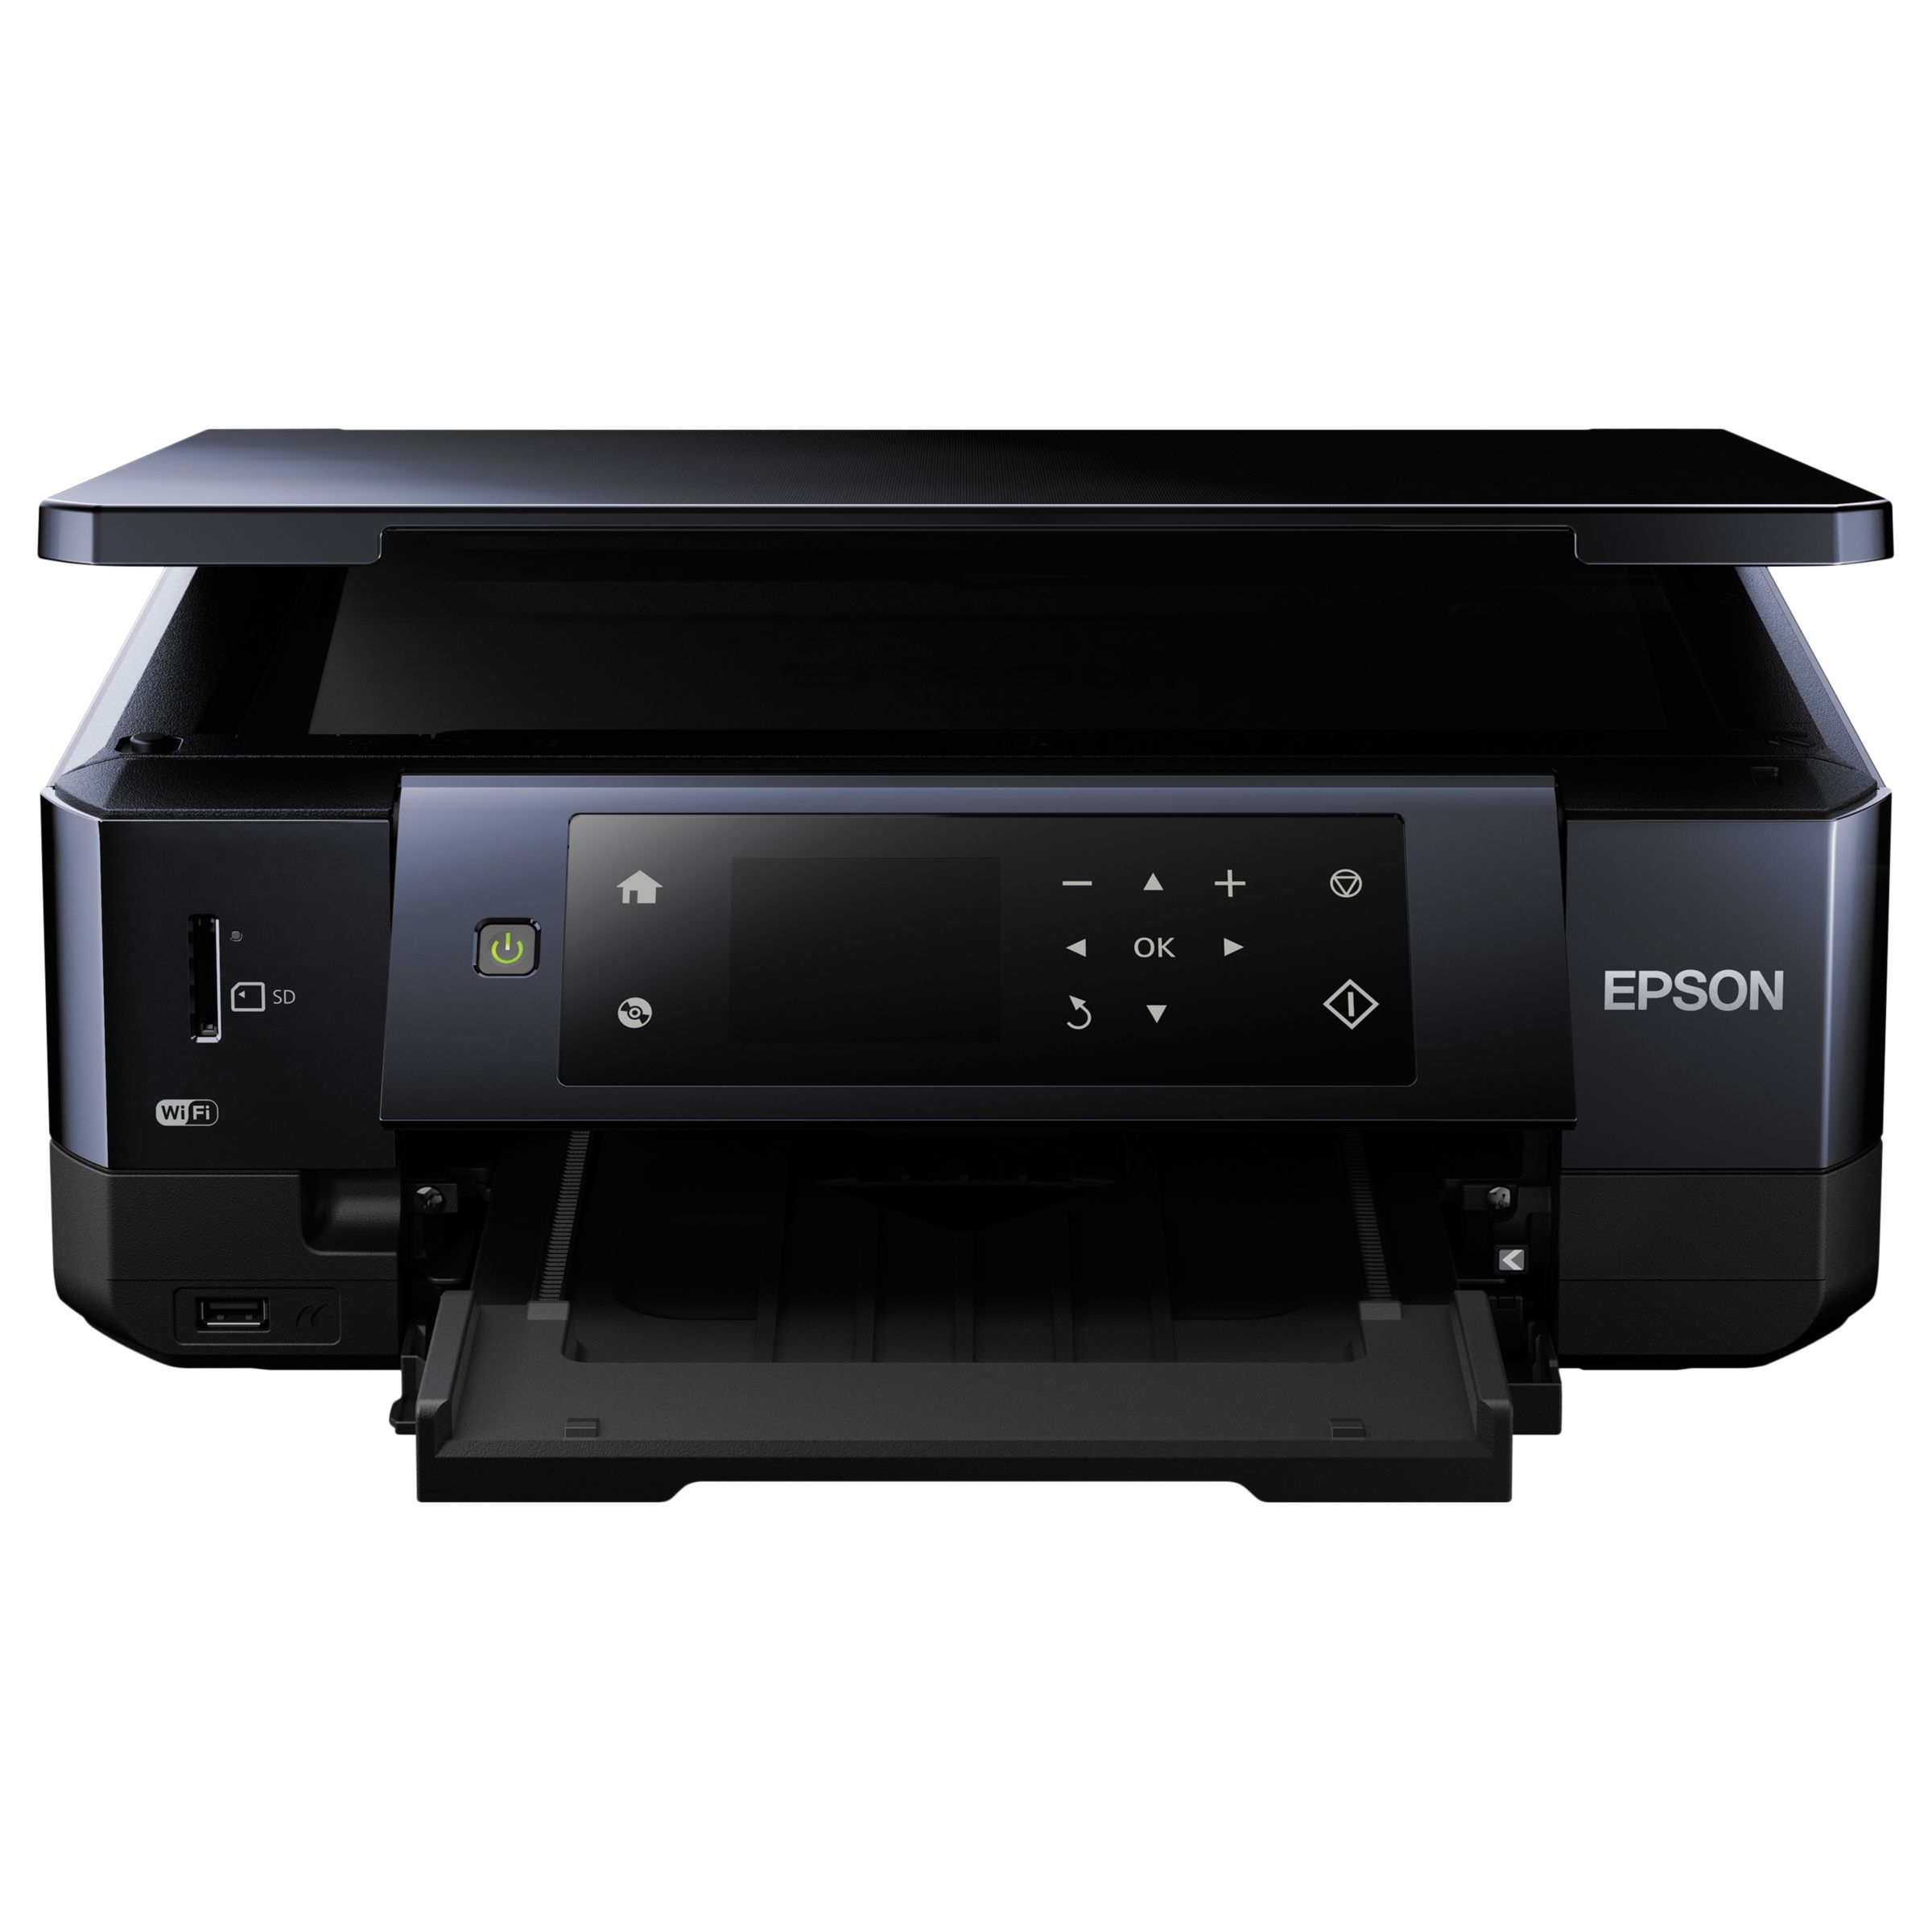  Epson  Expression Premium XP 640  Wi Fi All In One Printer 